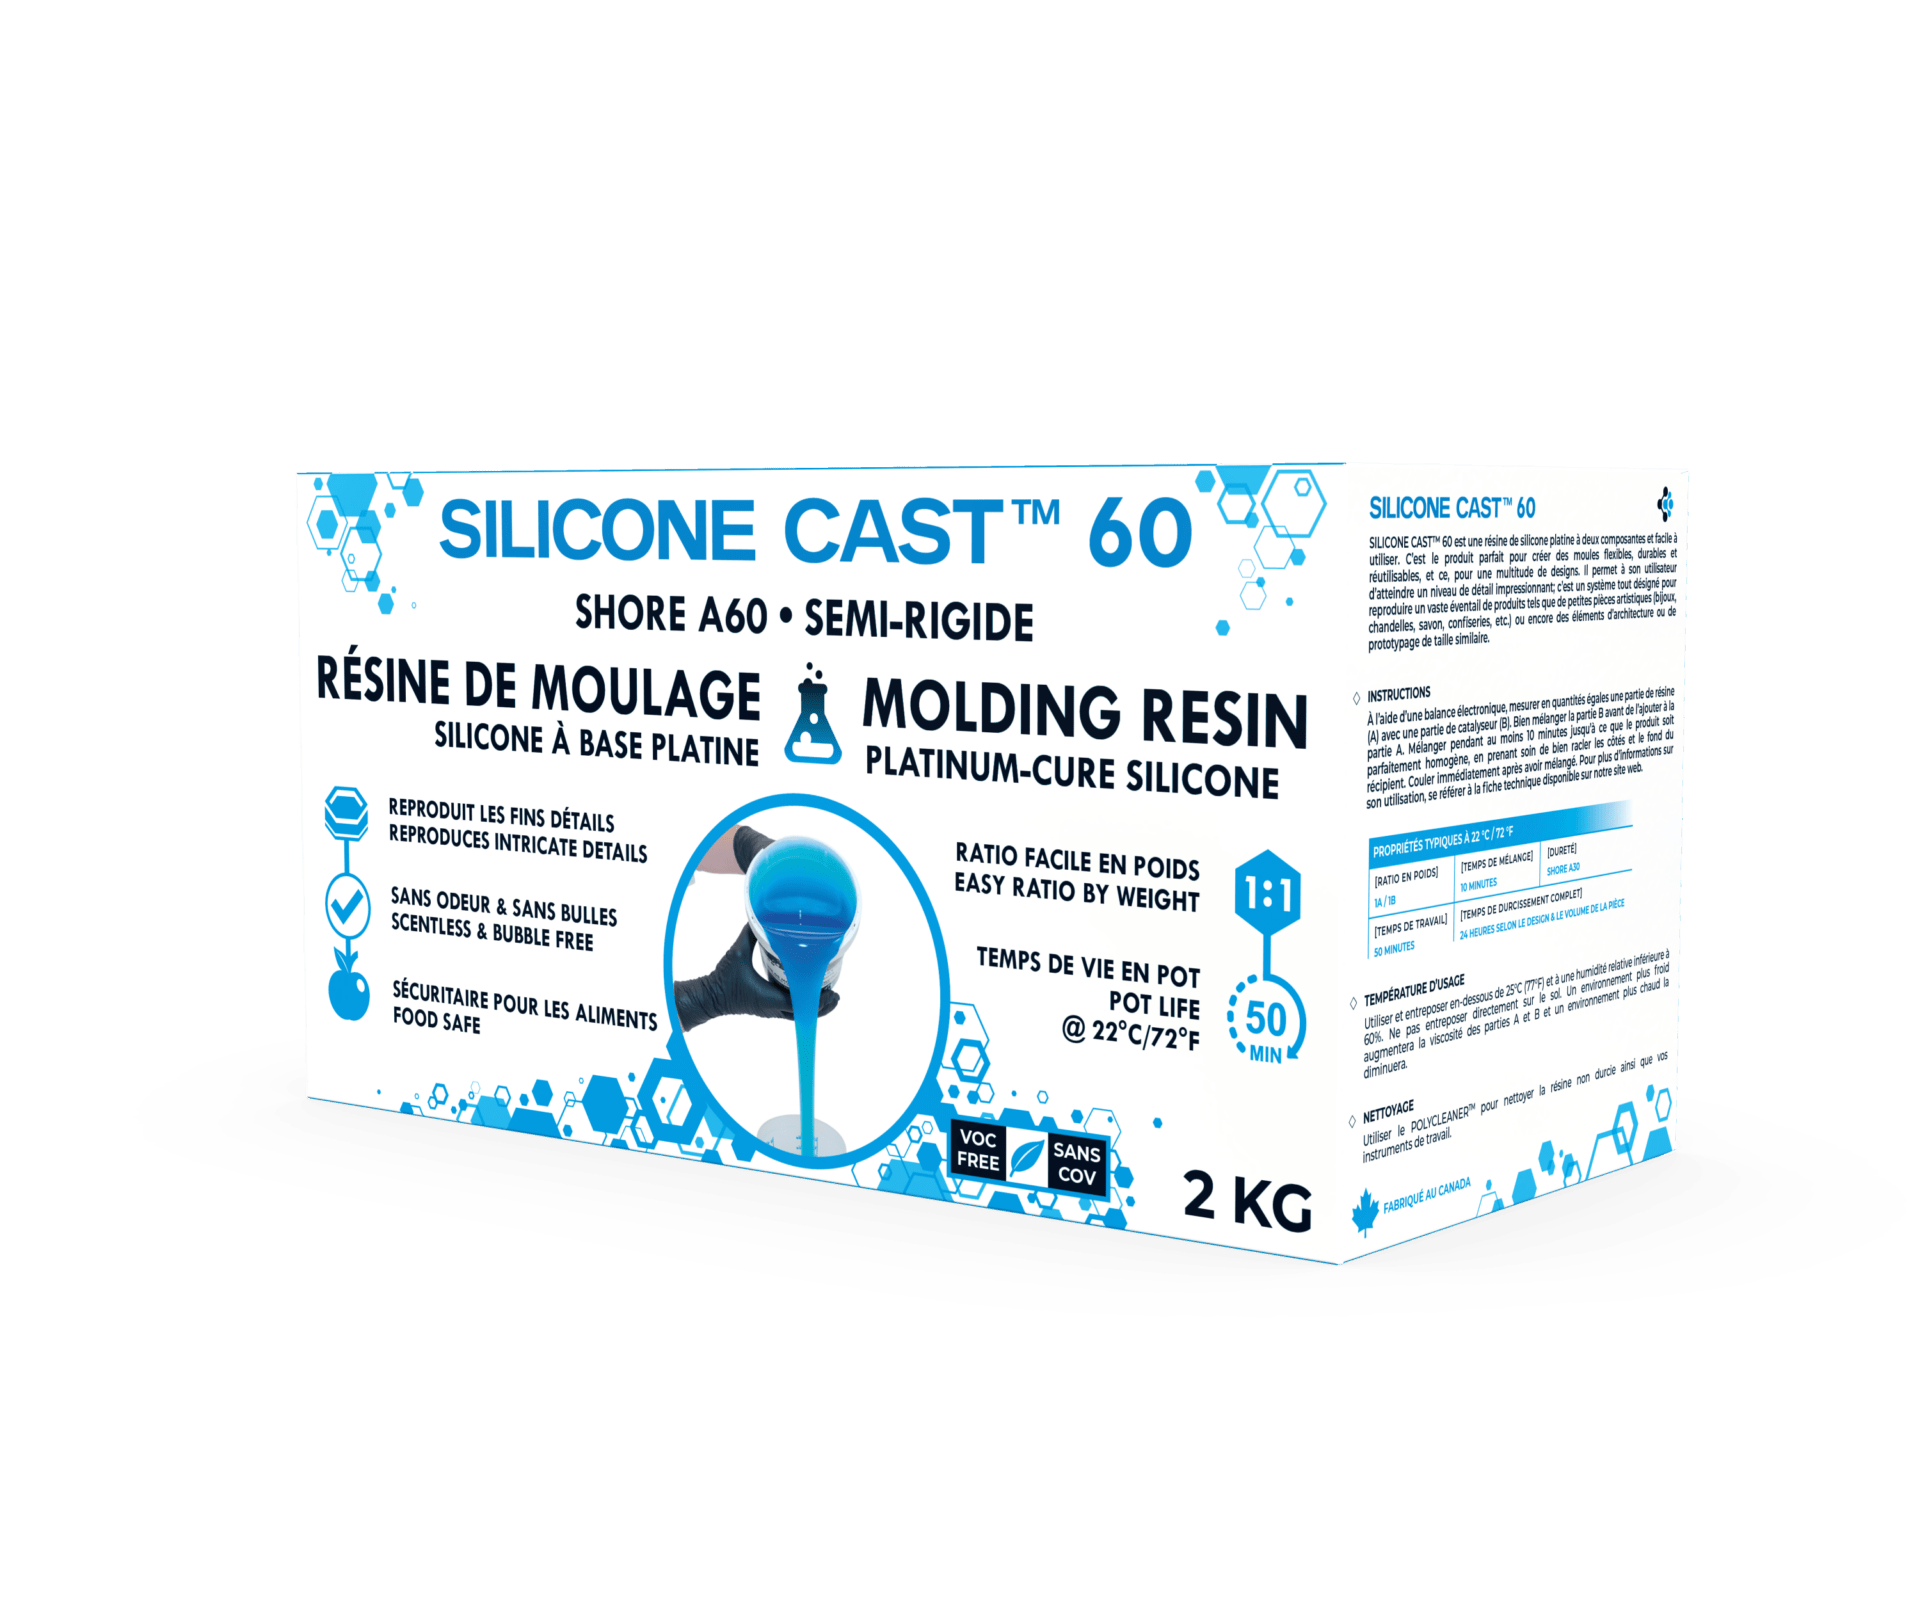 Magikmold® P-508 Platinum Cure Silicone Rubber